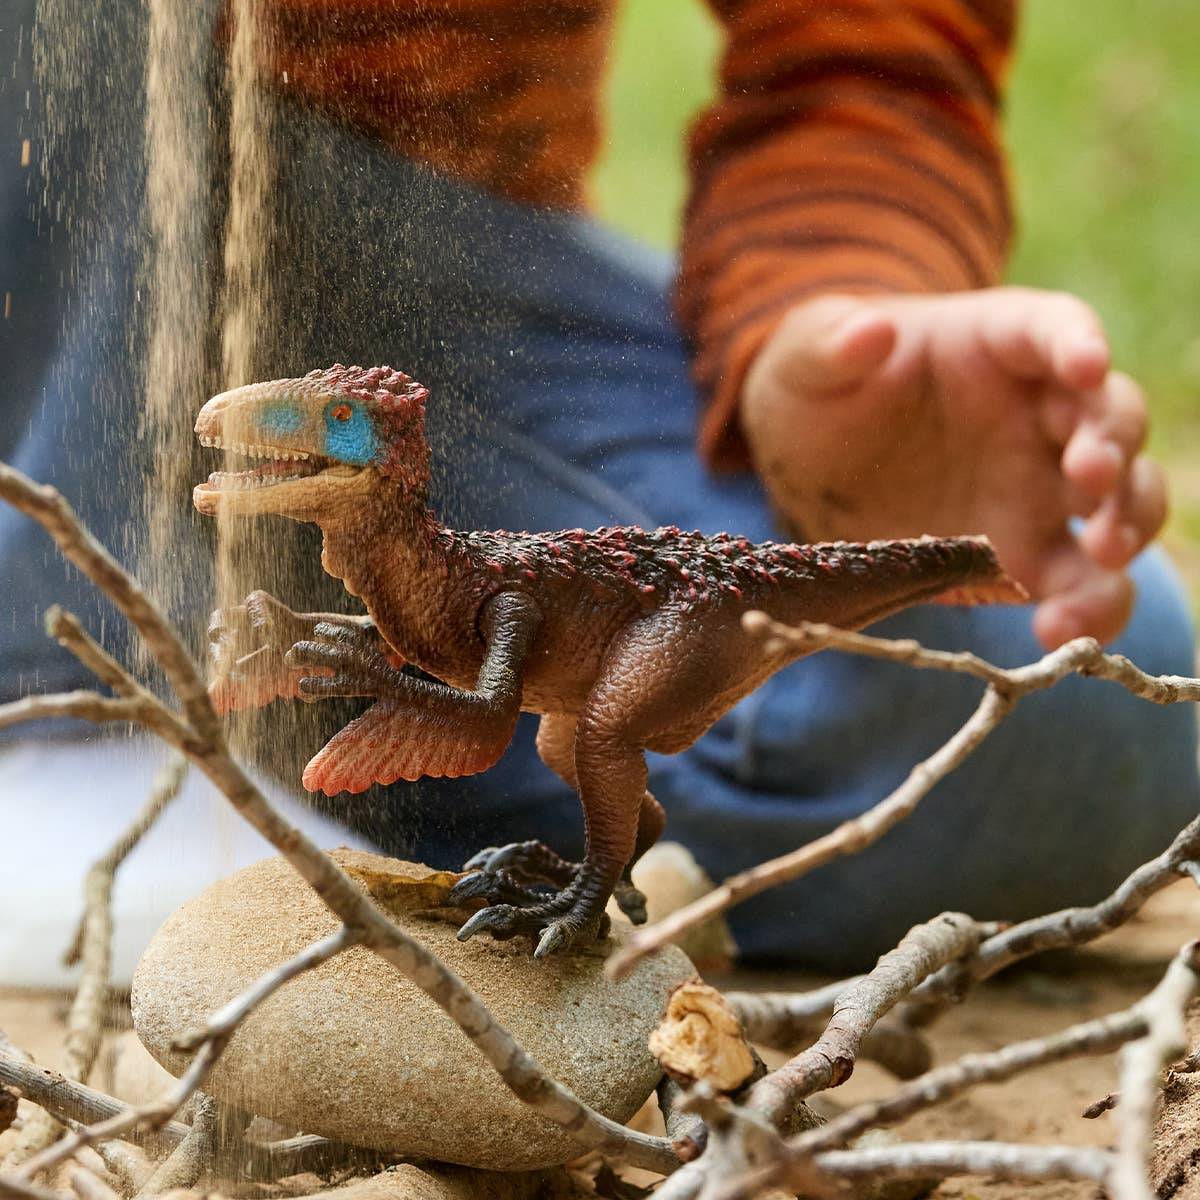 Utahraptor Dinosaur Toy